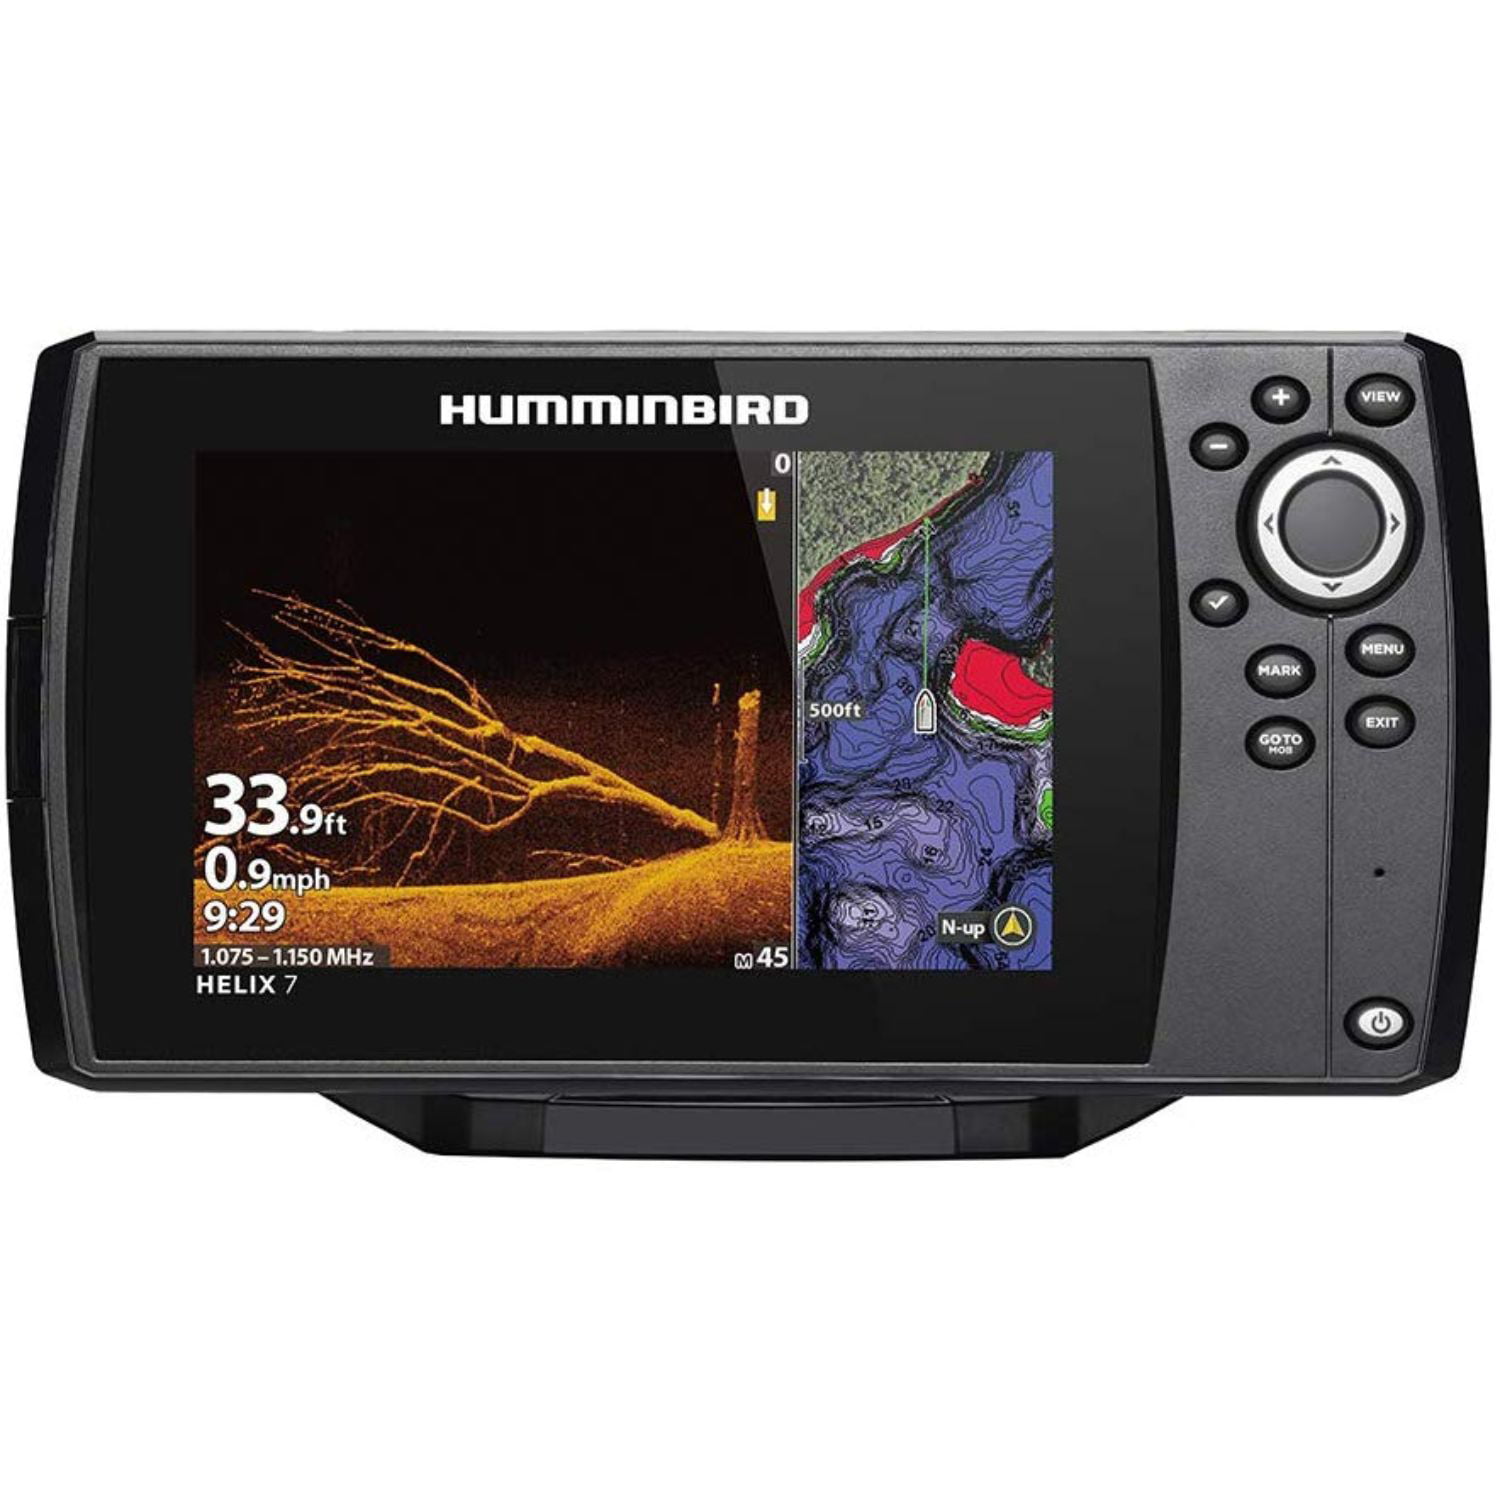 Humminbird Helix 7 CHIRP GPS G3 w/Xdcr 